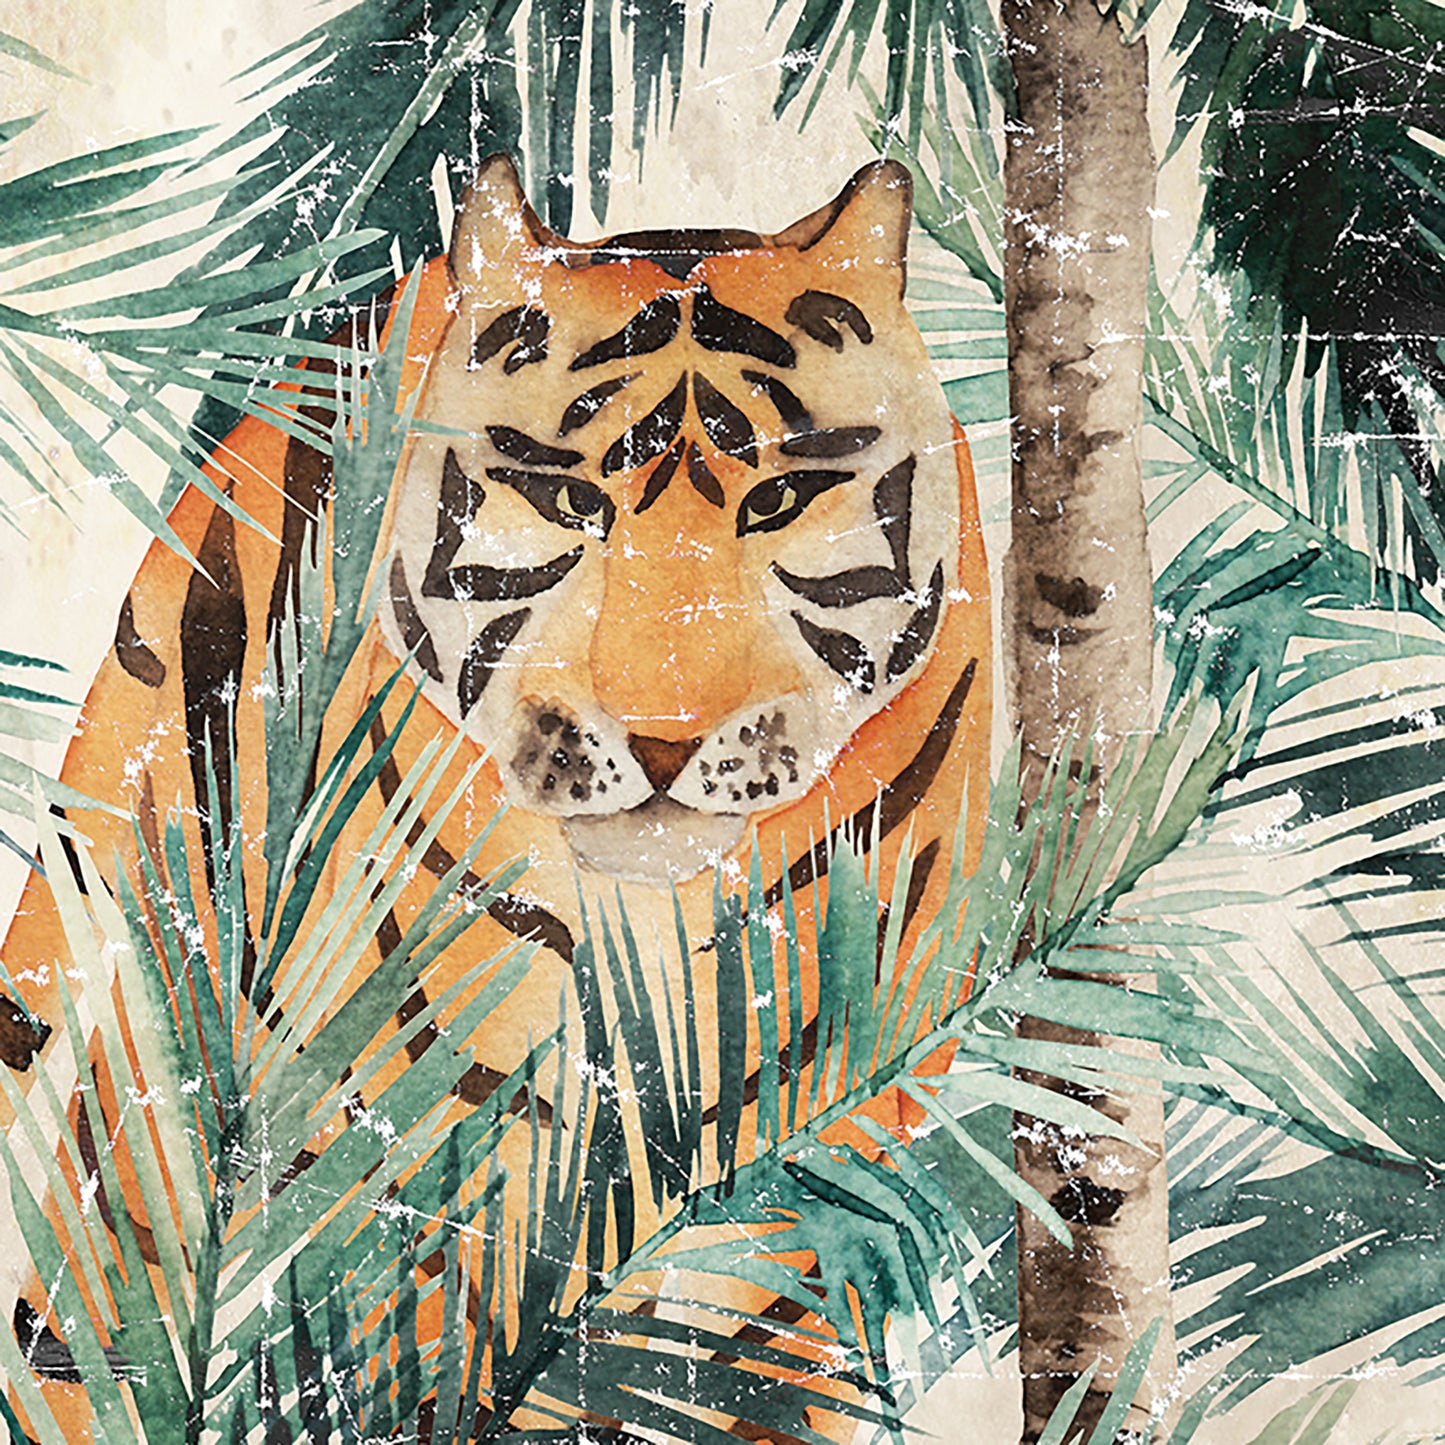 Bengali tiger & palm tree on Papier froissé (Wrinkled paper)